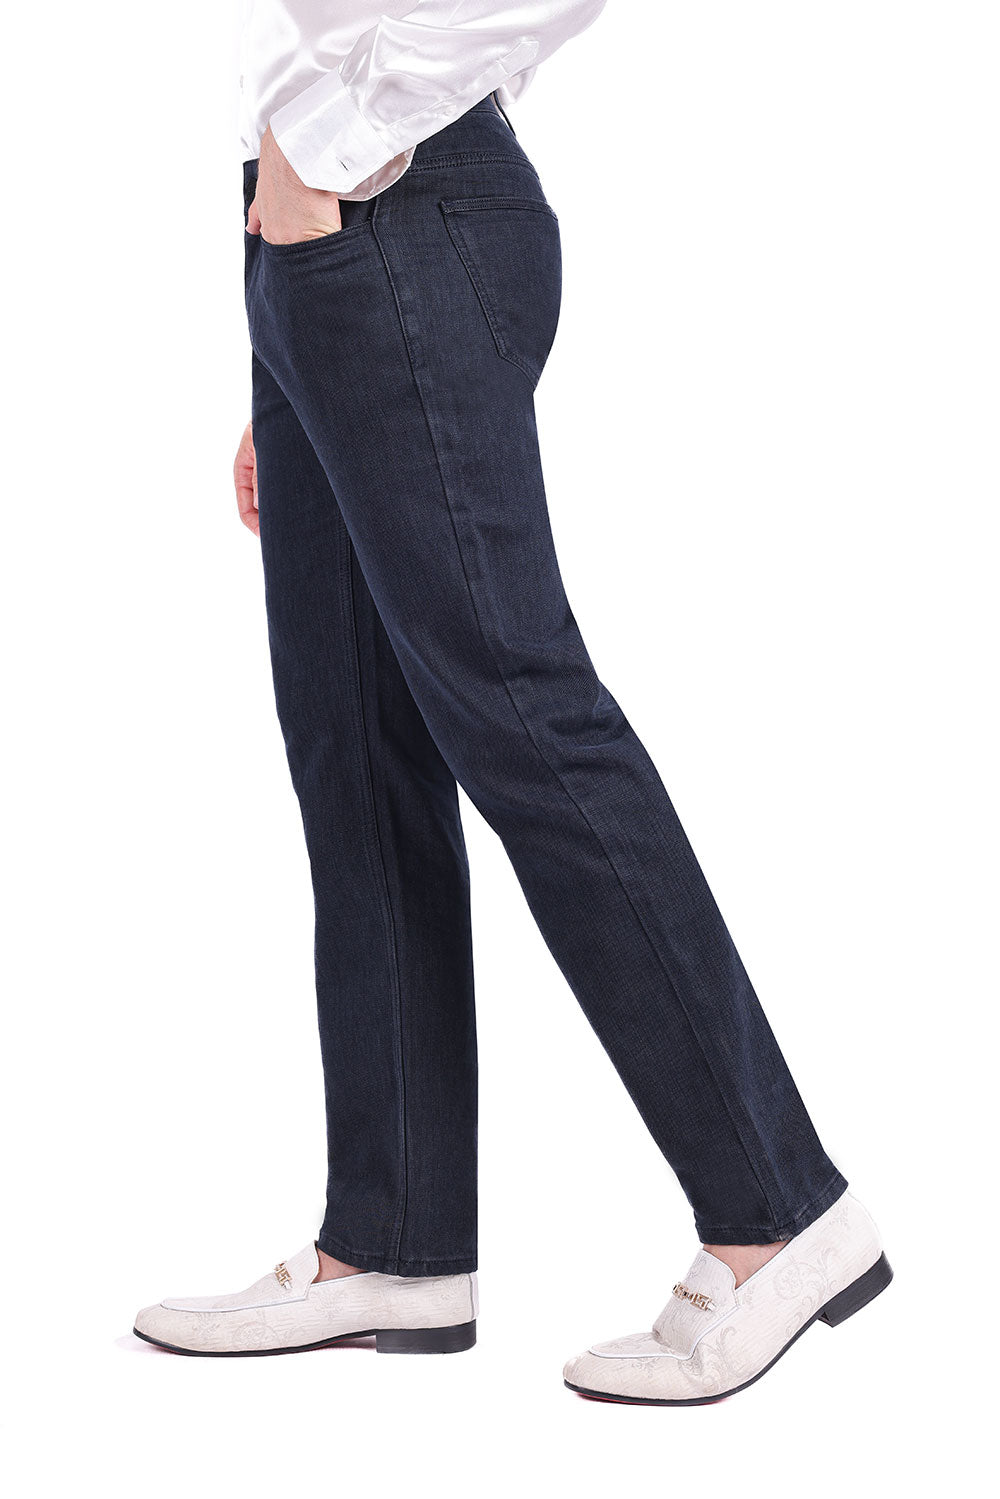 Barabas Men's Solid Color Premium Stretch Denim Jeans 3SN100 Dark Blue